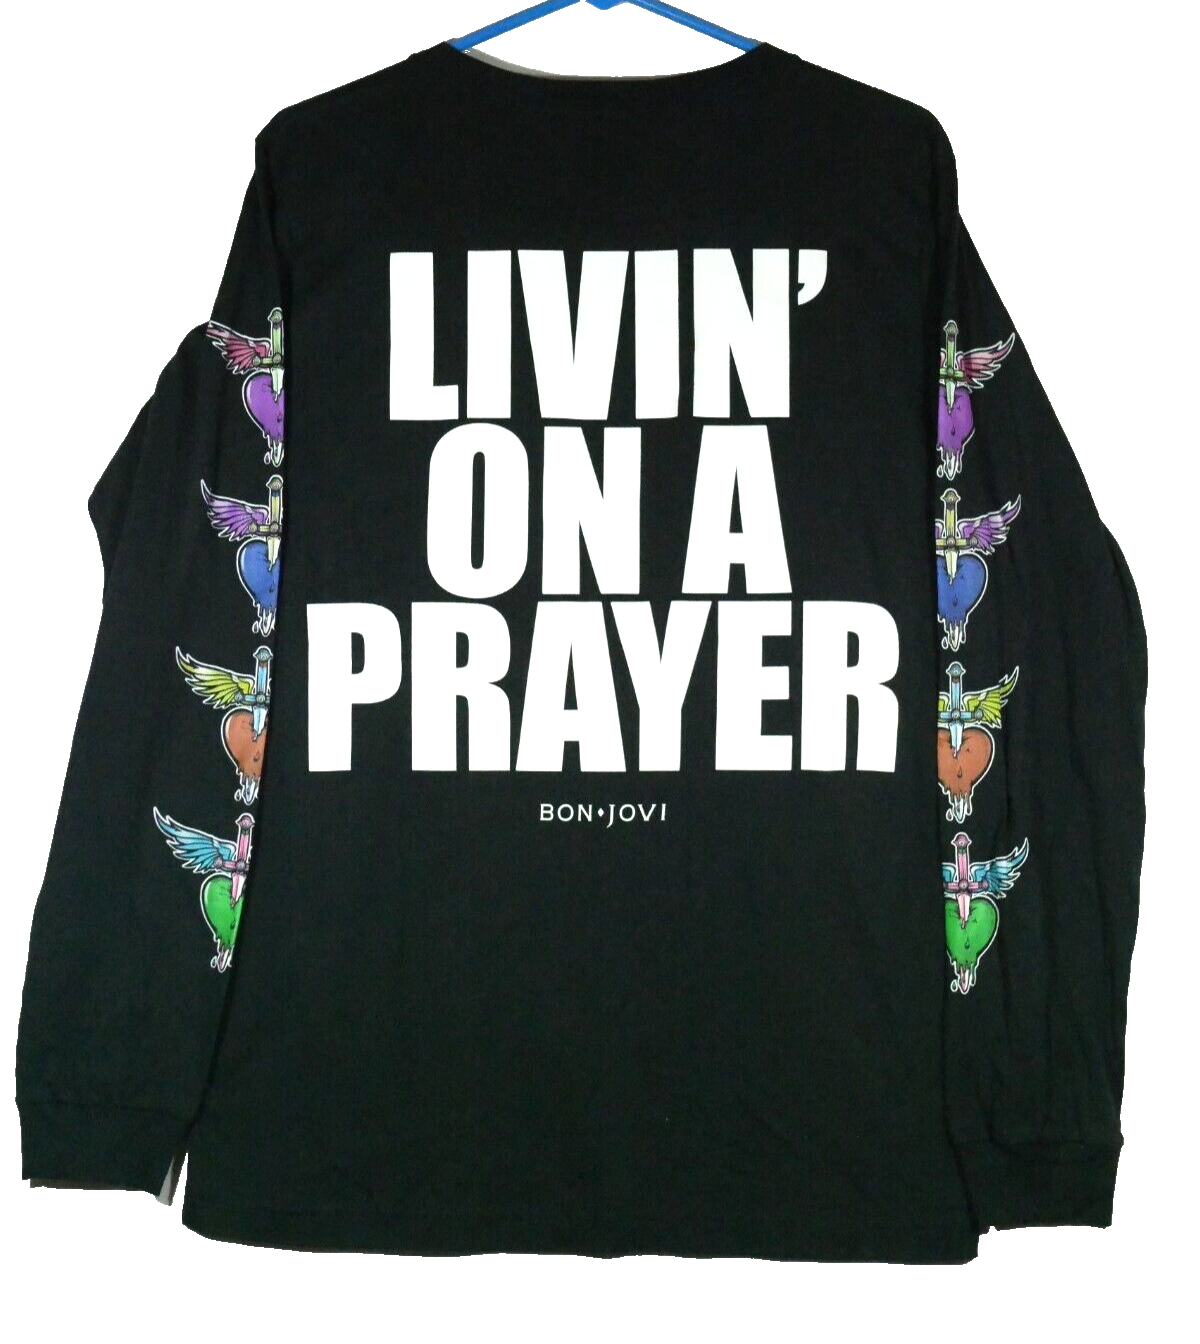 Primary image for Bon Jovi Livin' On A Prayer Black Adult Long Sleeve Tee Shirt T-Shirt Sz. Med